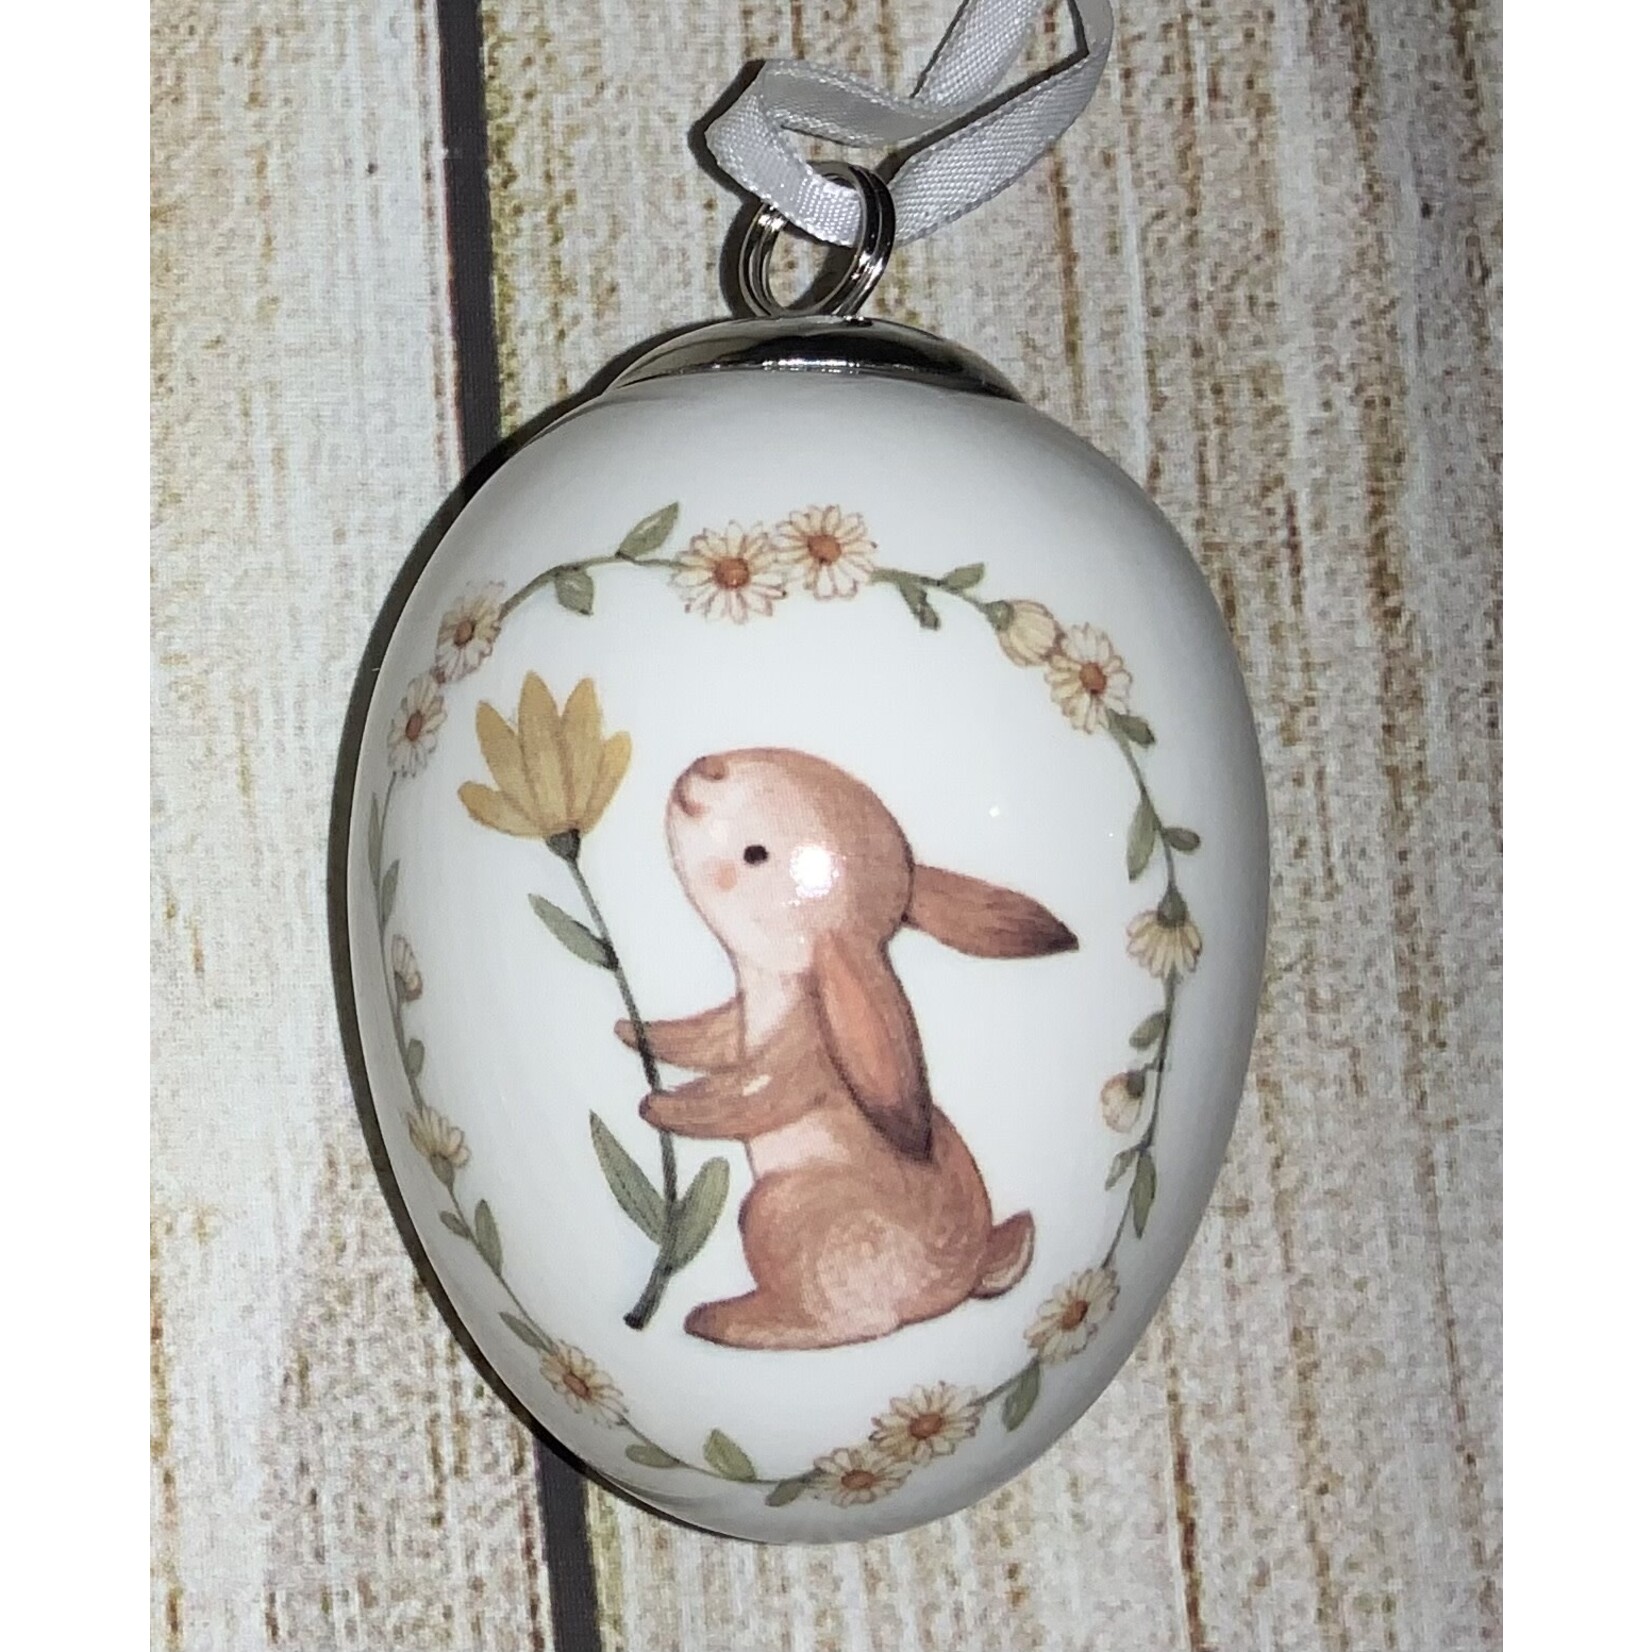 Ganz Dolomite Bunny Ornament Holding Flower Stem